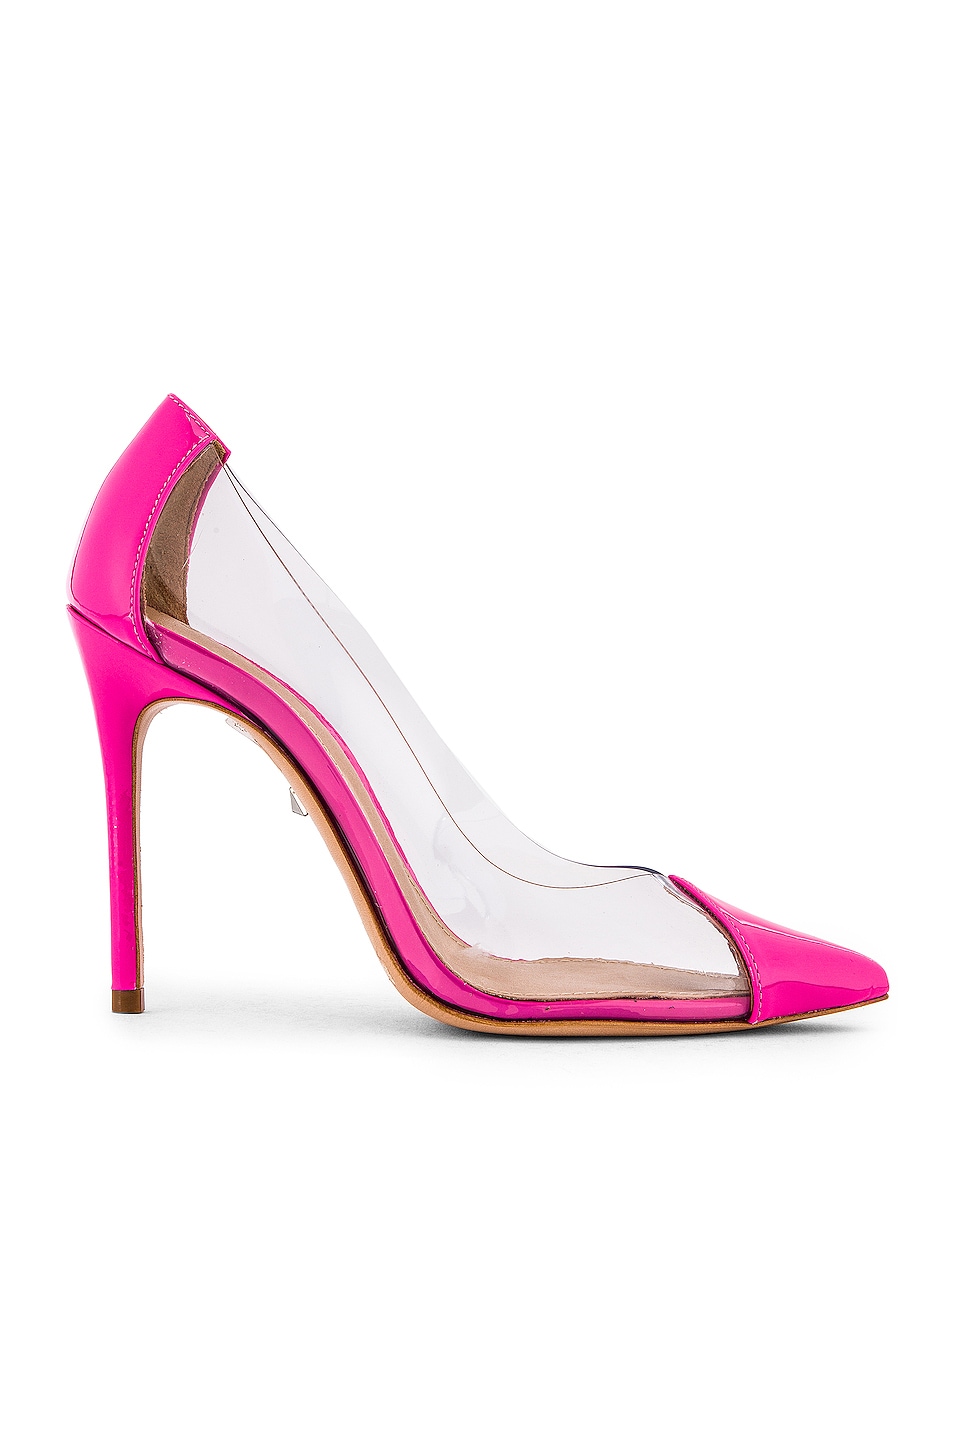 Schutz Cendi Heel in Neon Pink | REVOLVE